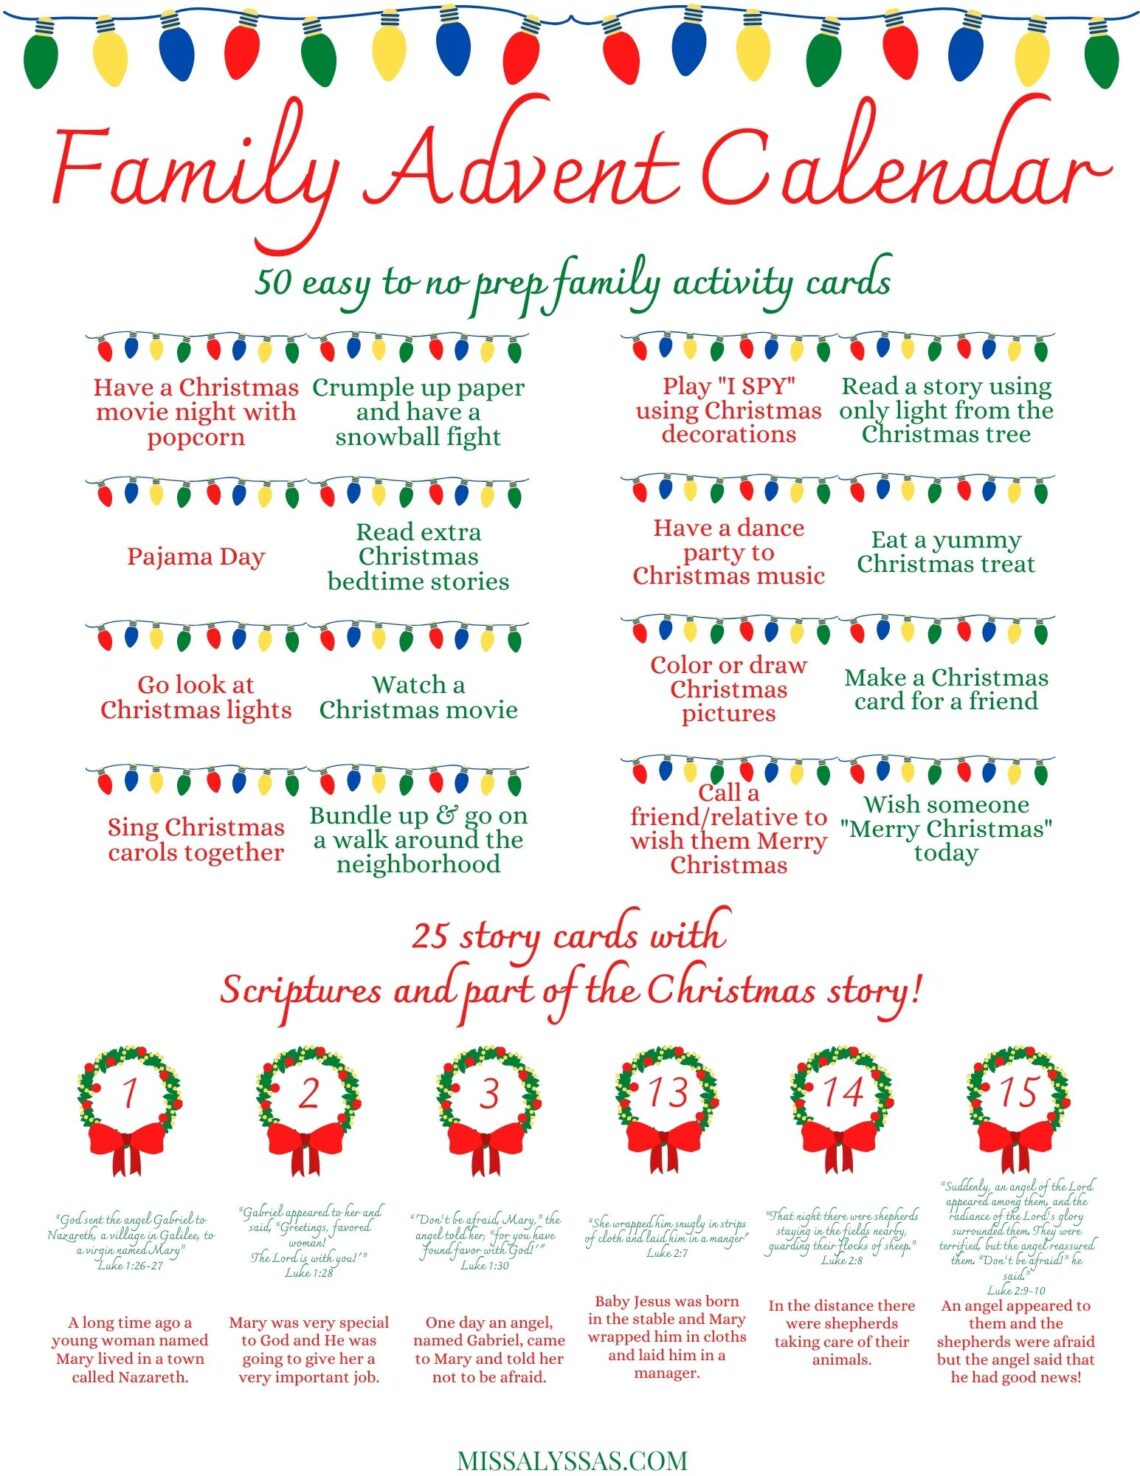 Family Advent Calendar Miss Alyssa's